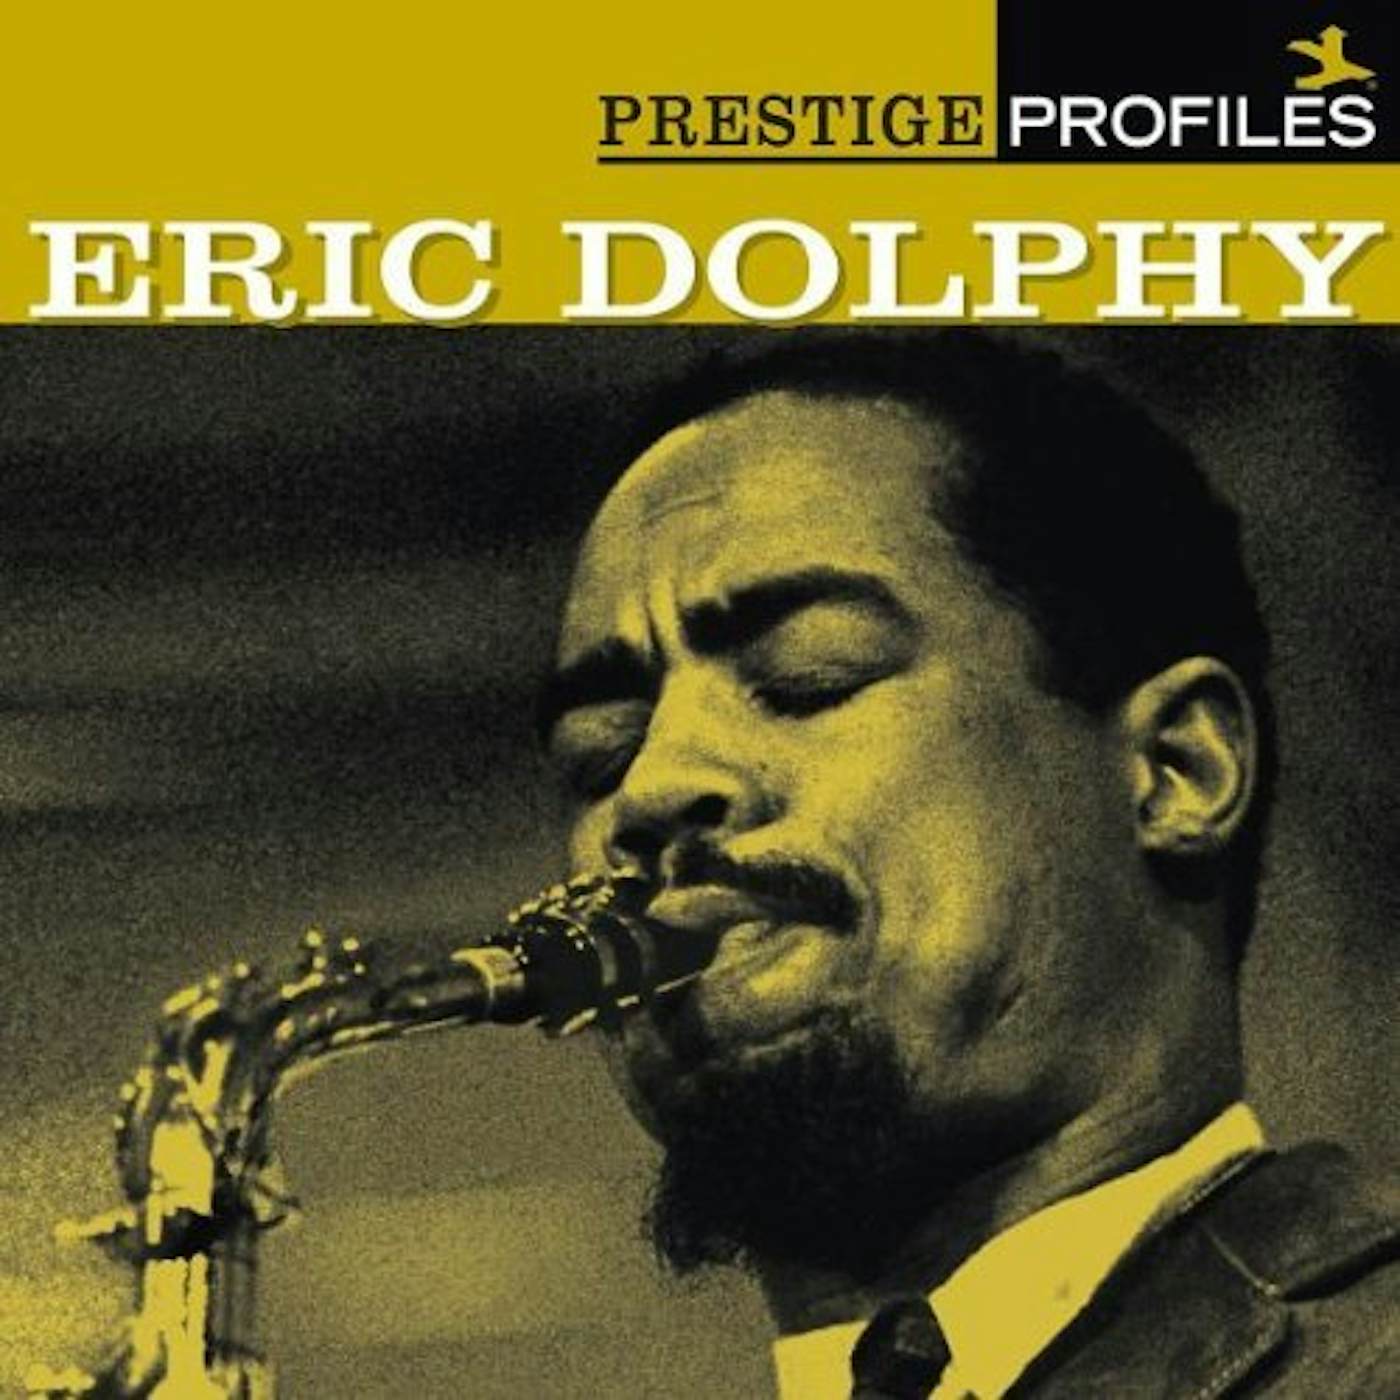 Eric Dolphy PRESTIGE PROFILES 5 CD